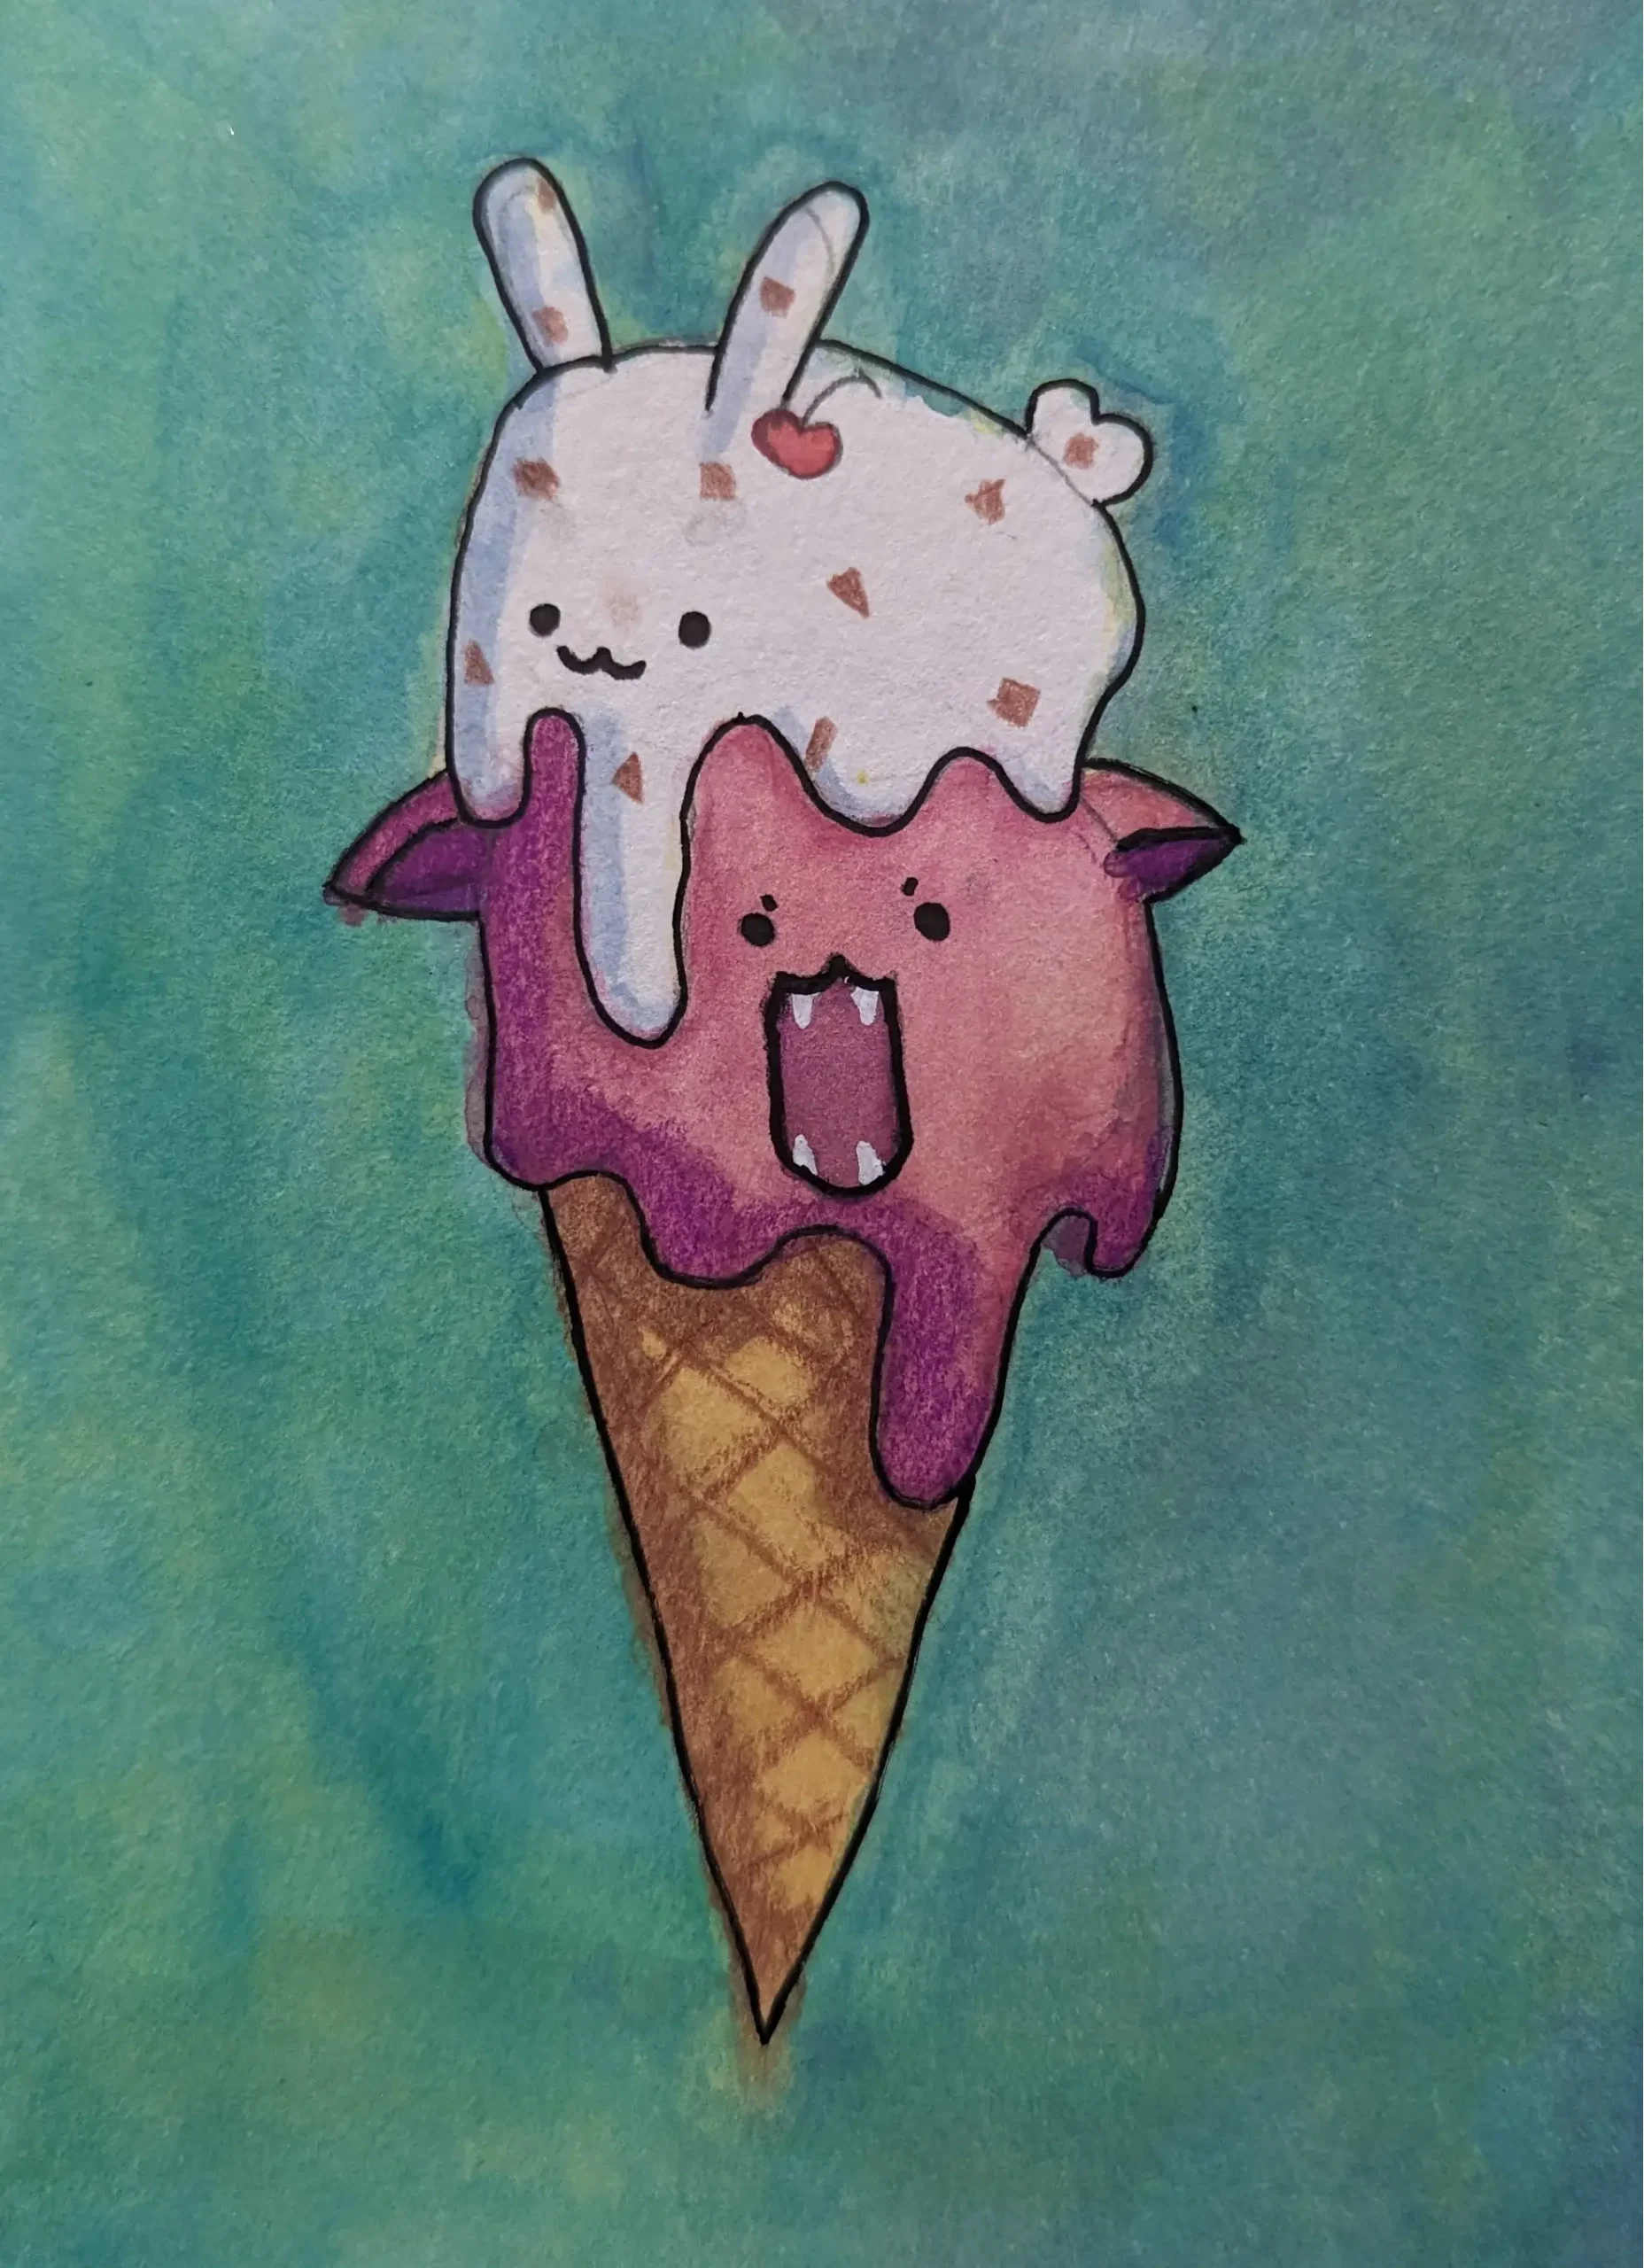 artwork of ice cream cone with face